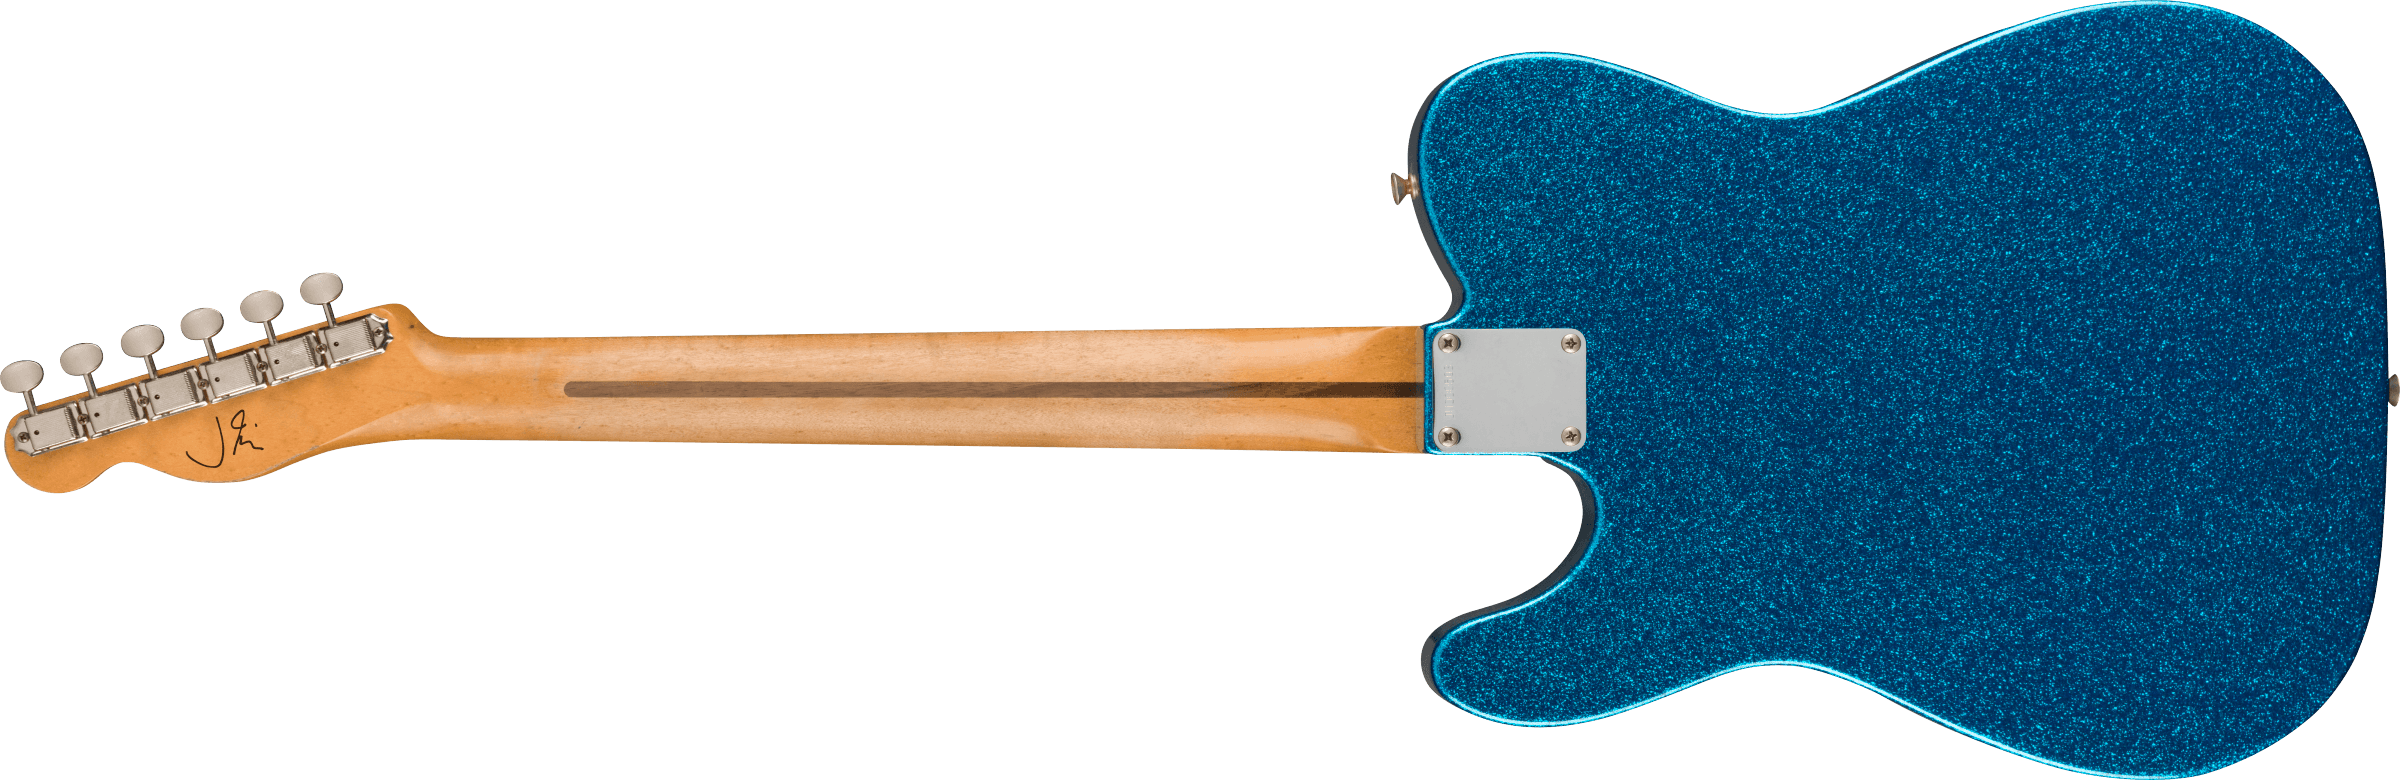 Fender Telecaster J. Mascis Signature 2s Ht Mn - Sparkle Blue - Guitarra eléctrica con forma de tel - Variation 1